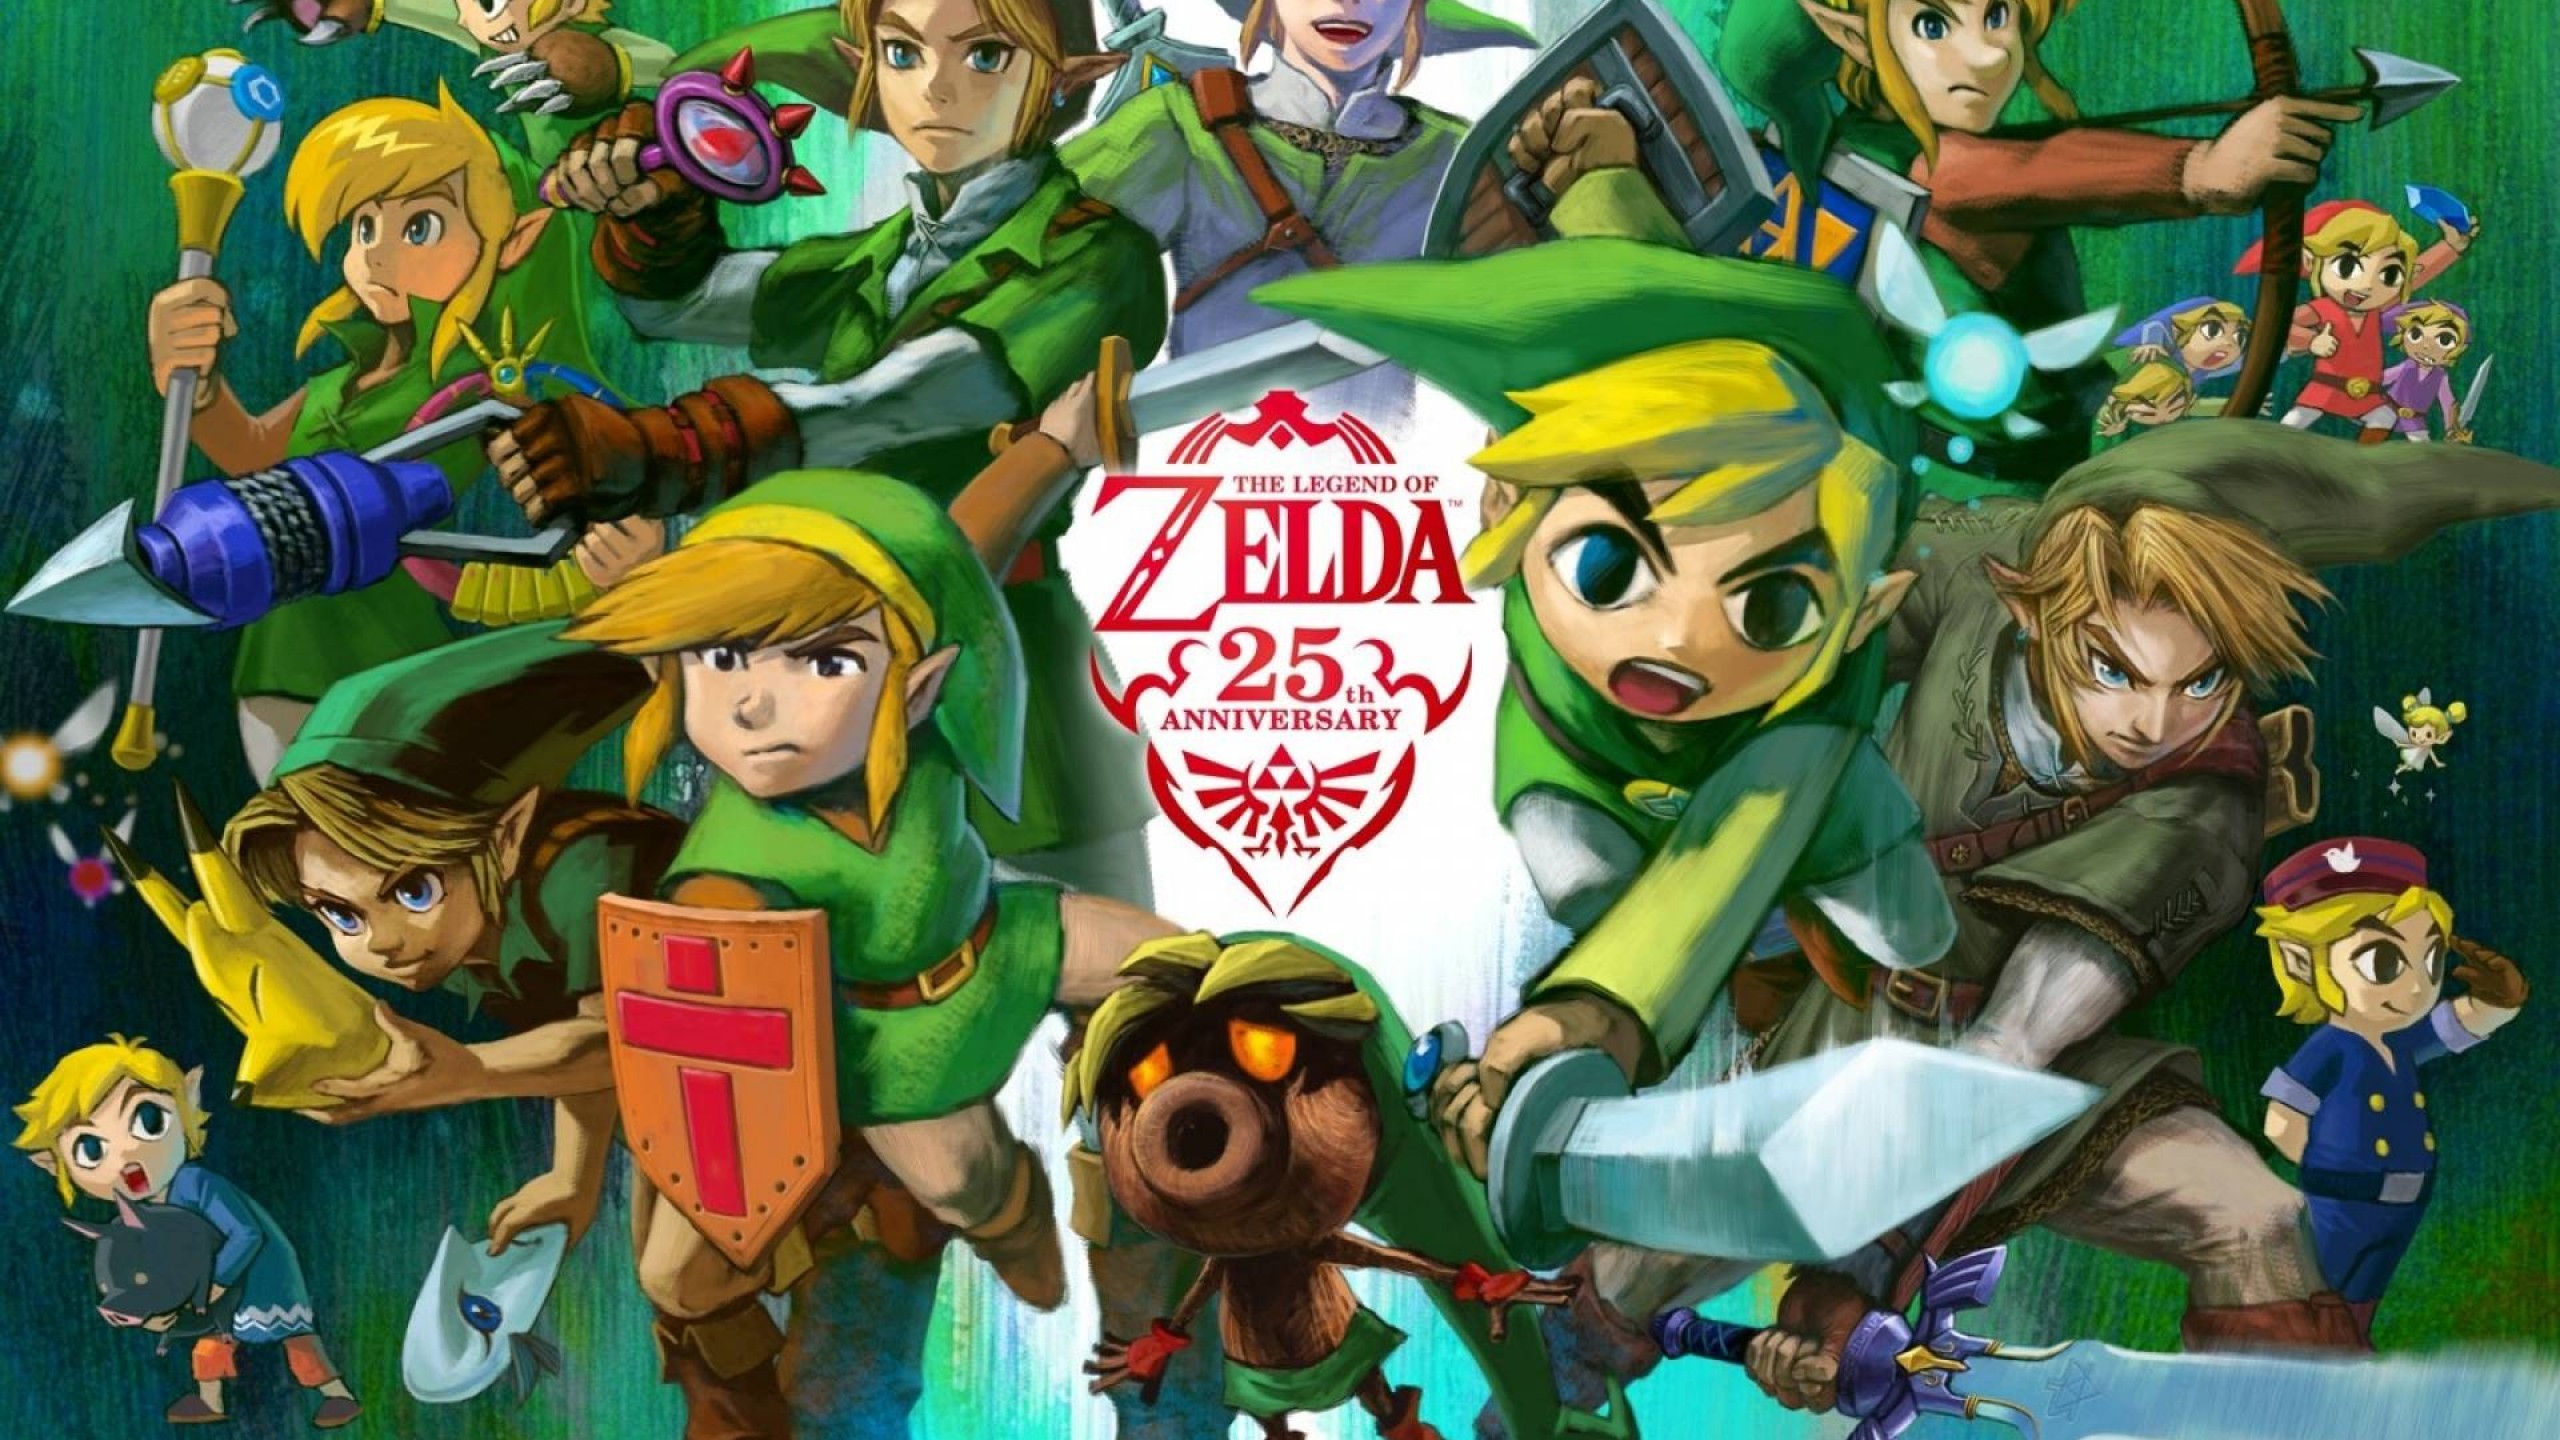 Wallpaper de la Leyenda de Zelda